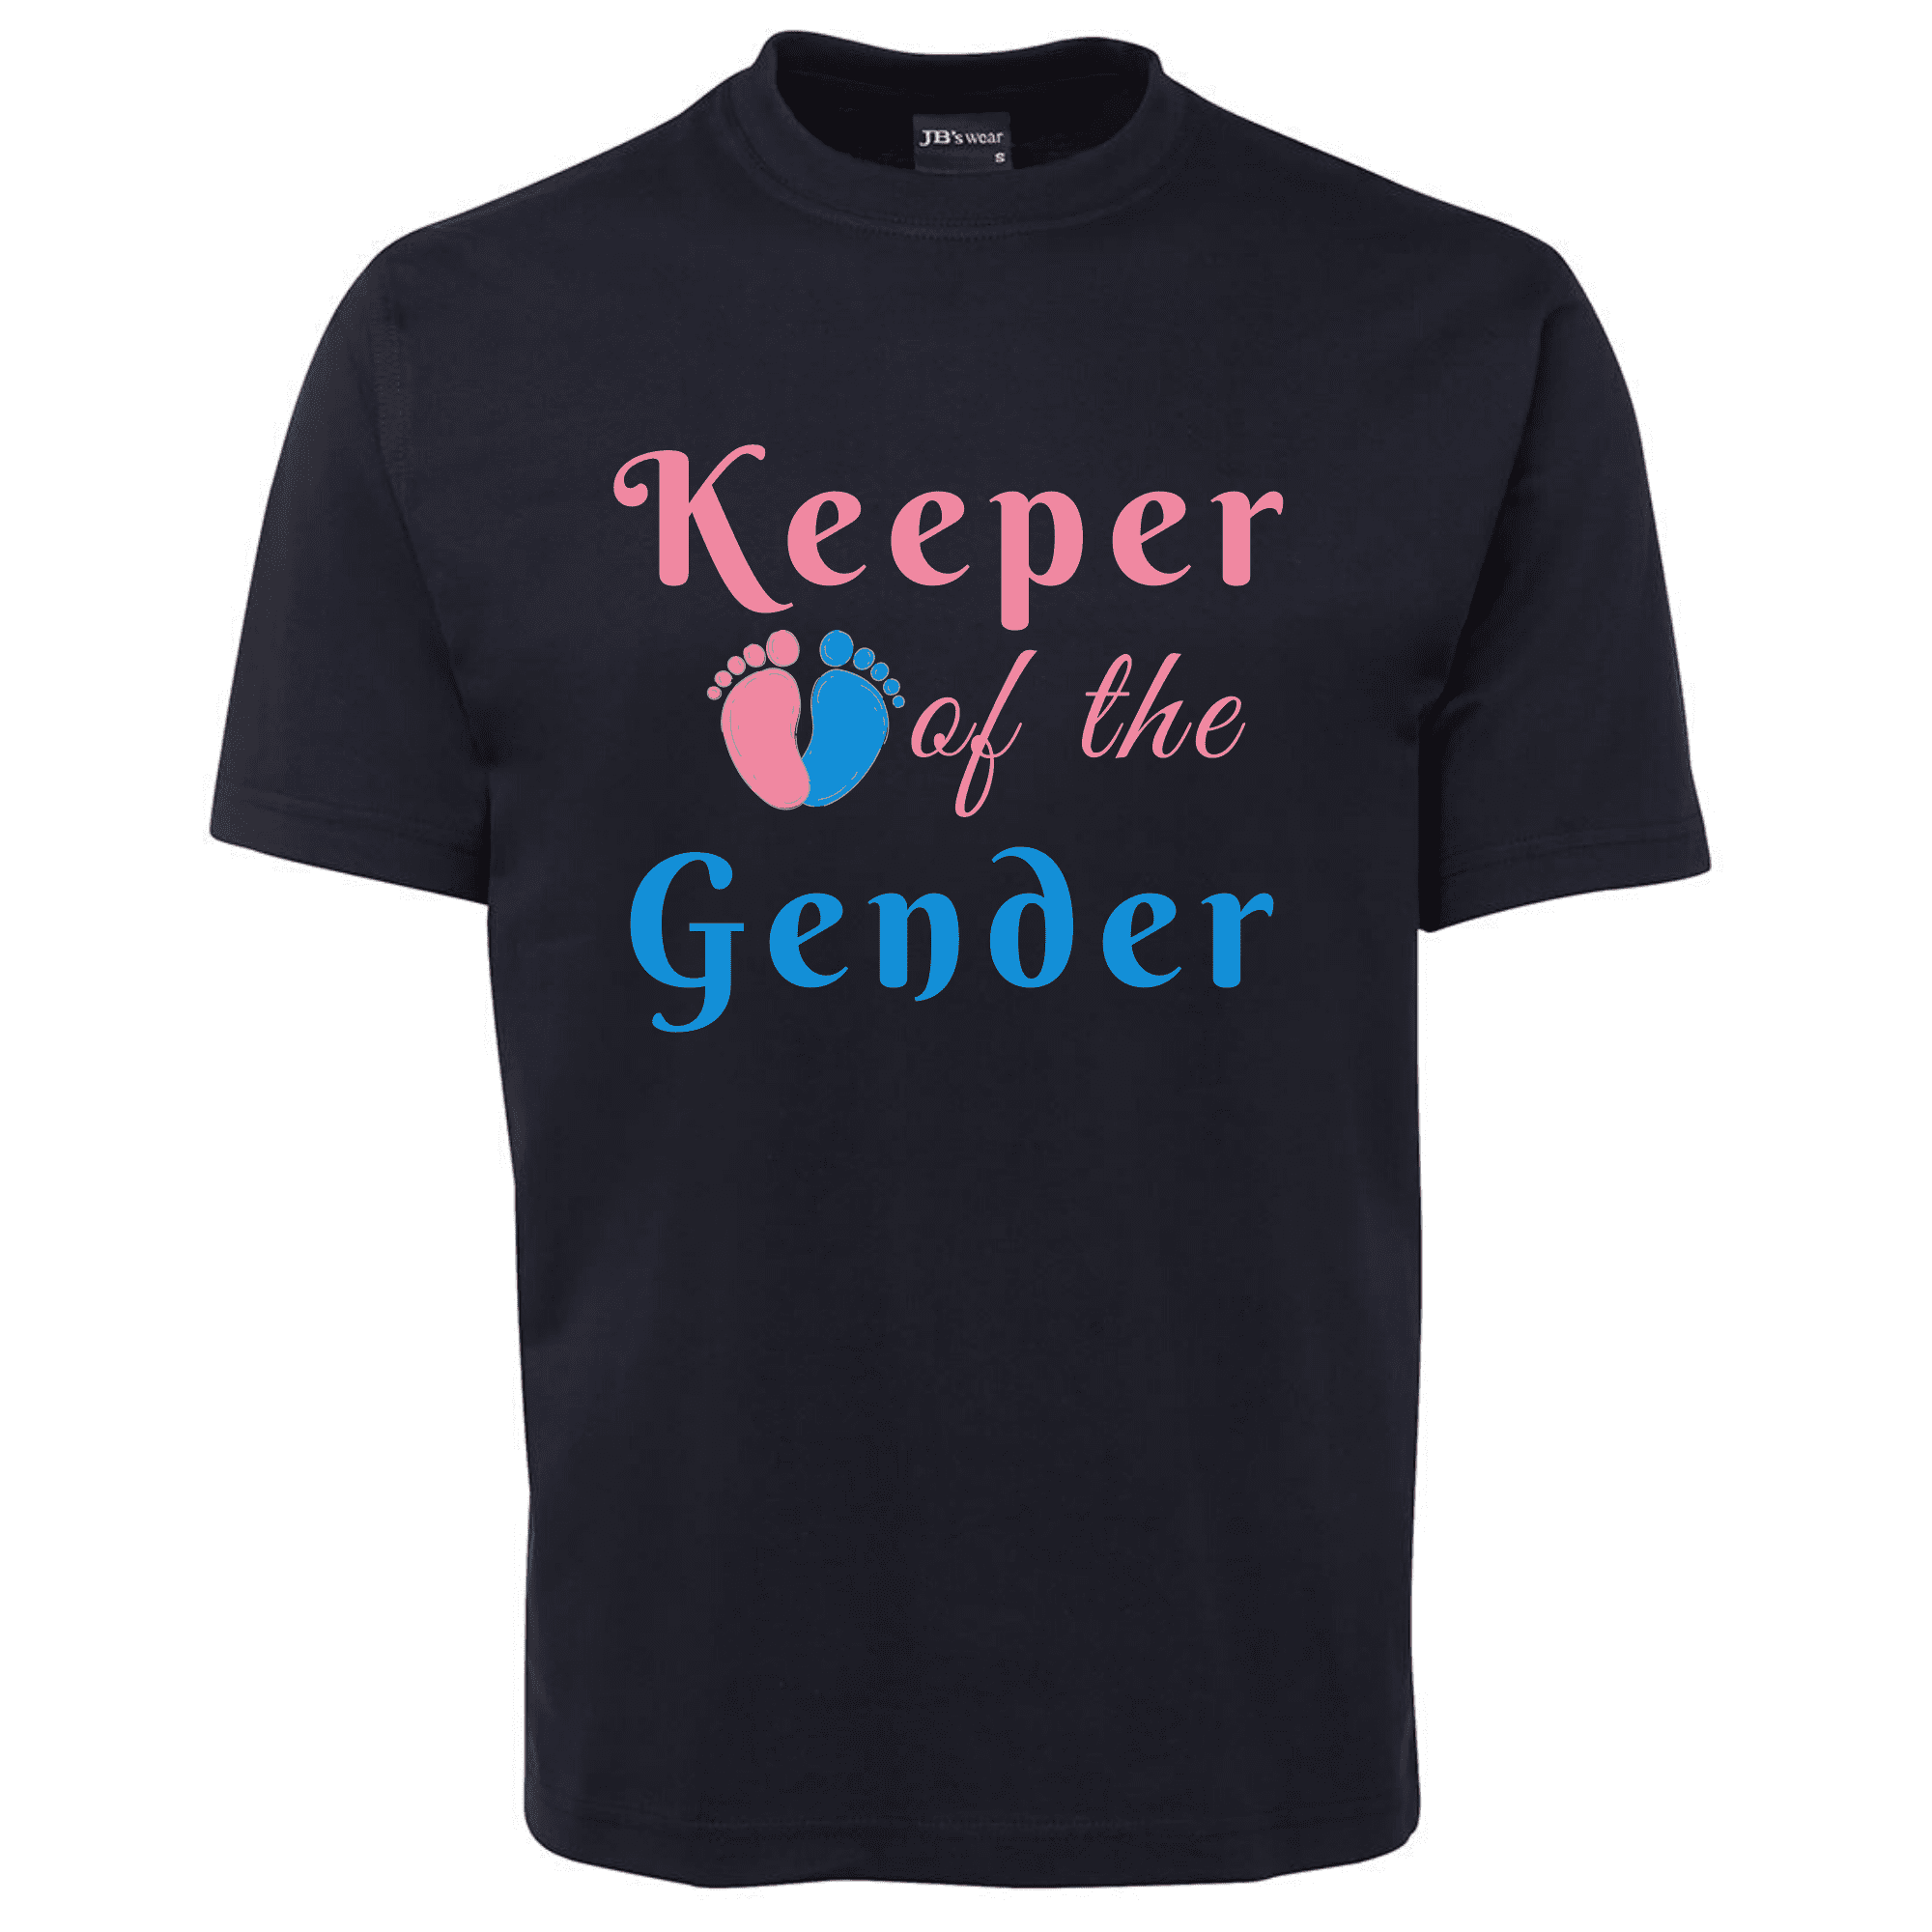 Keeper-of-the-Gender_Black-Shirt